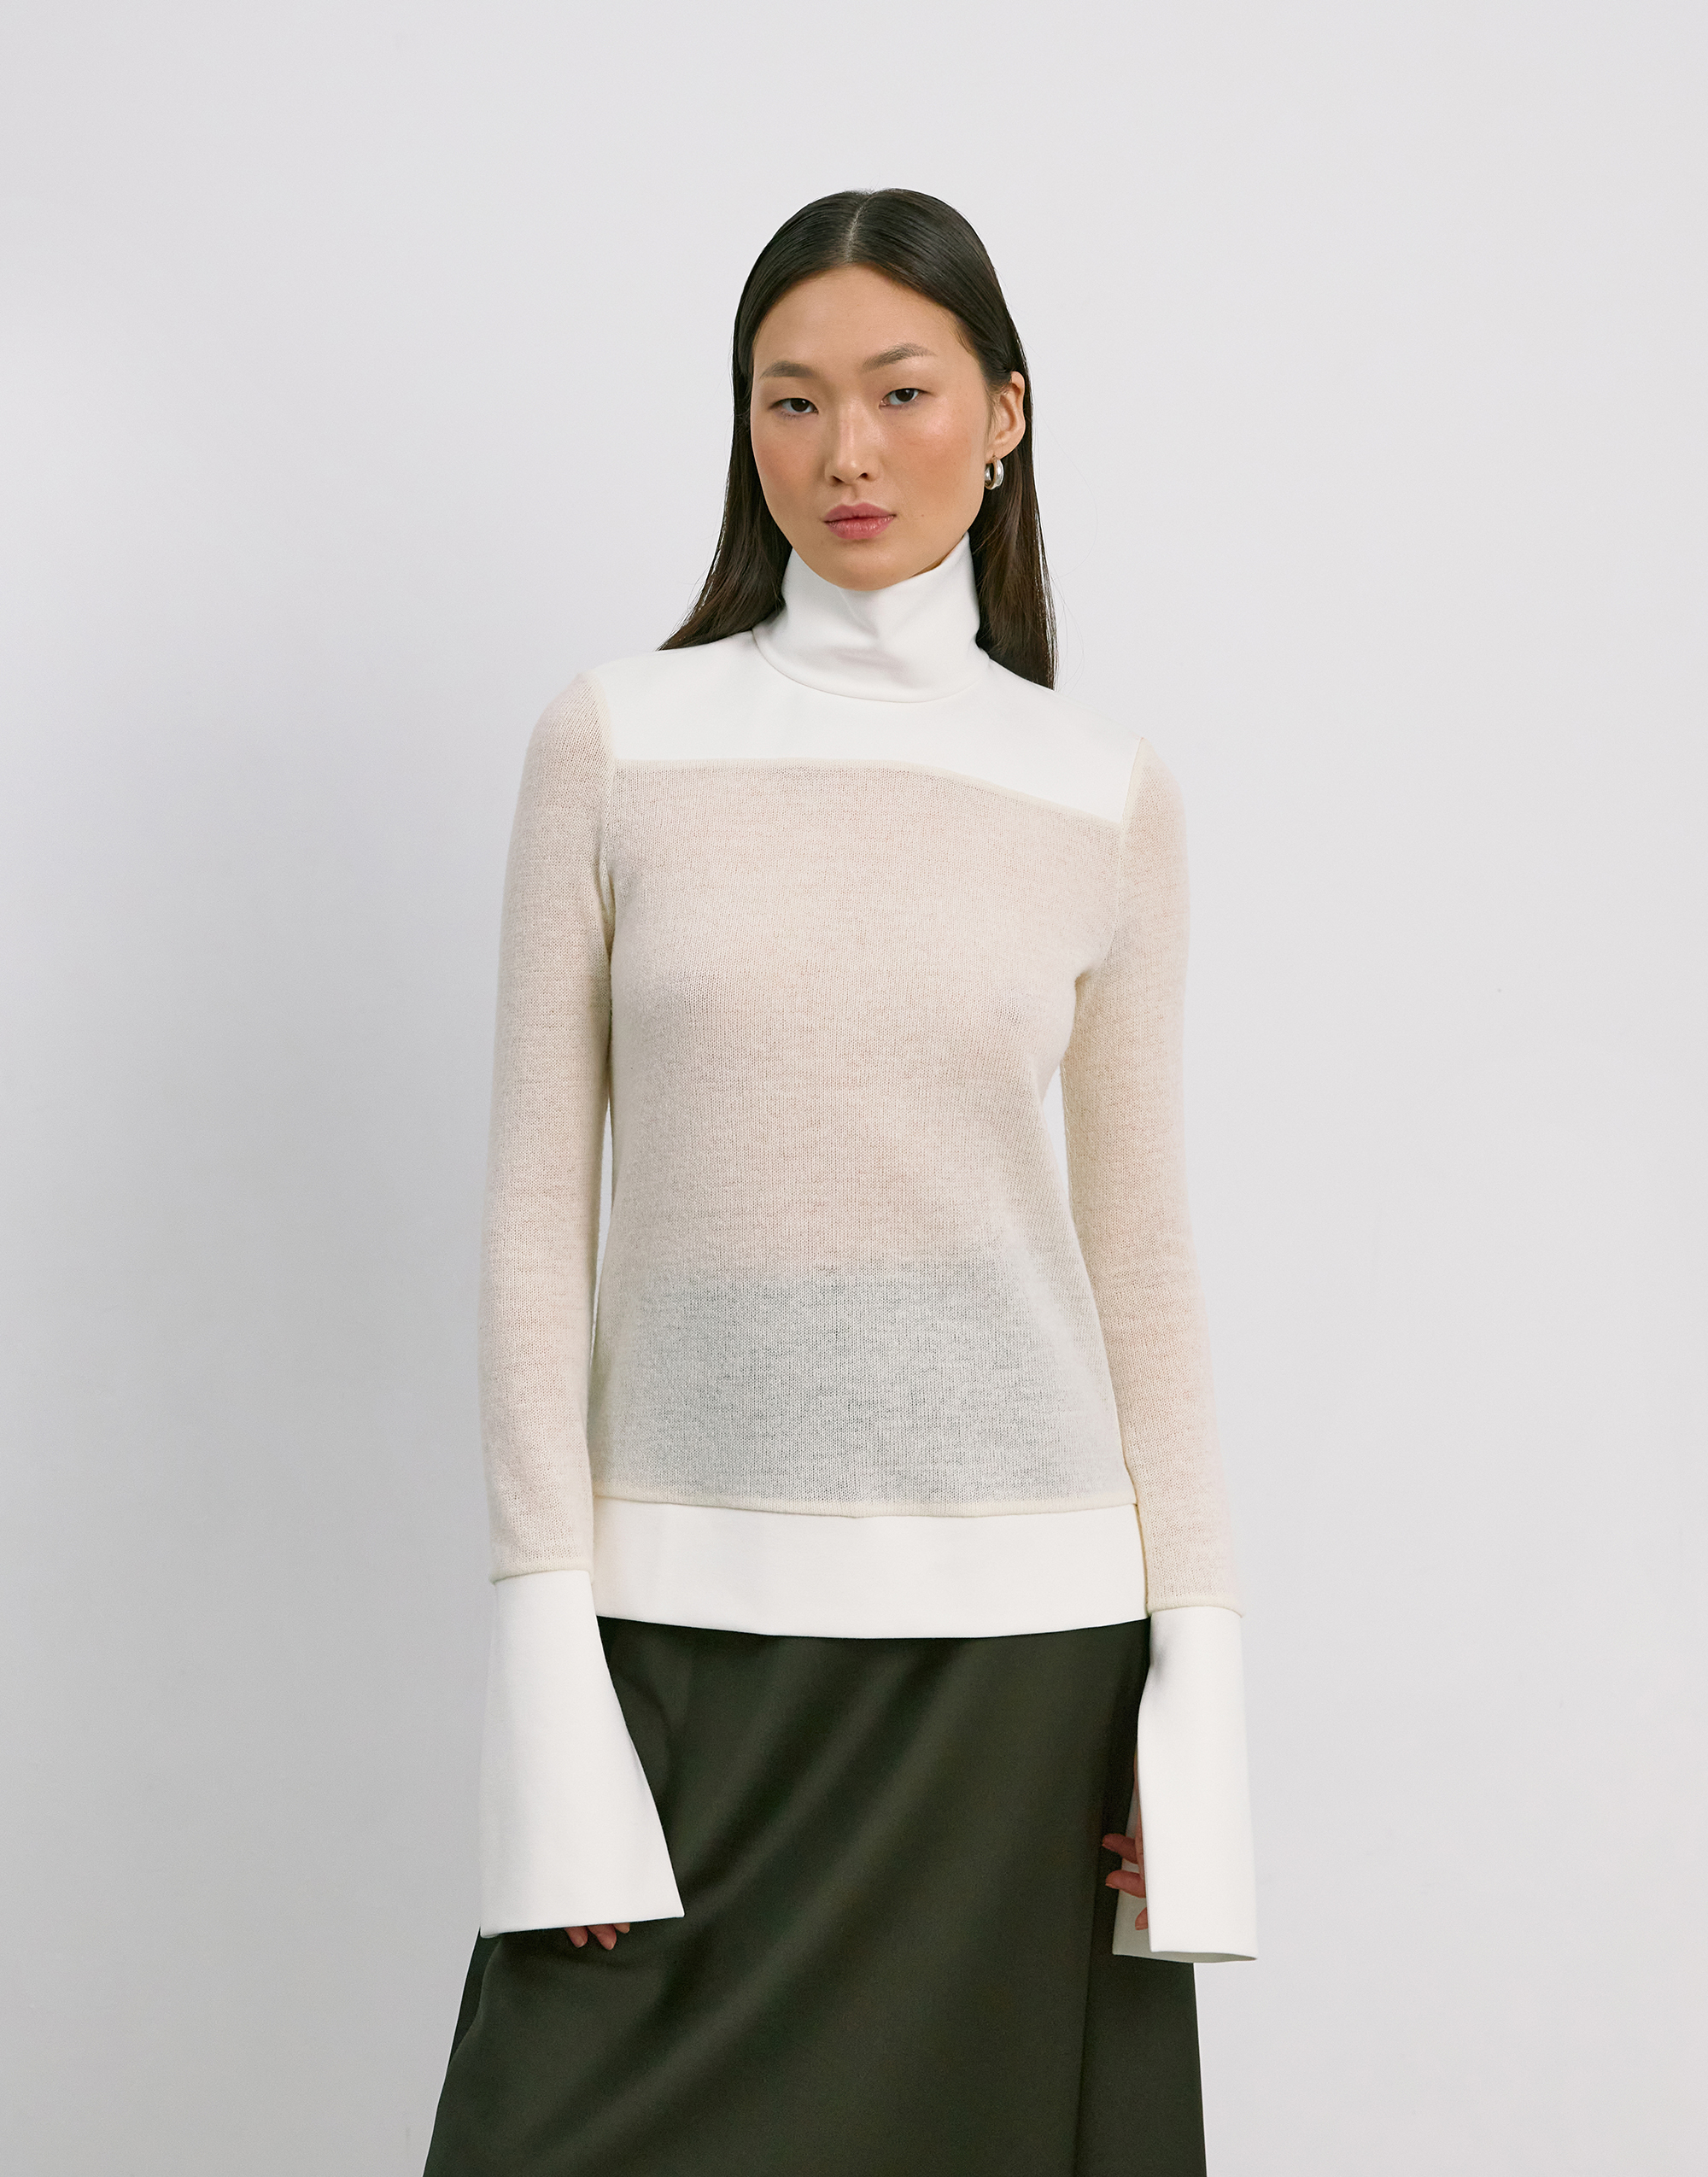 Turtleneck sweater, pattern №893